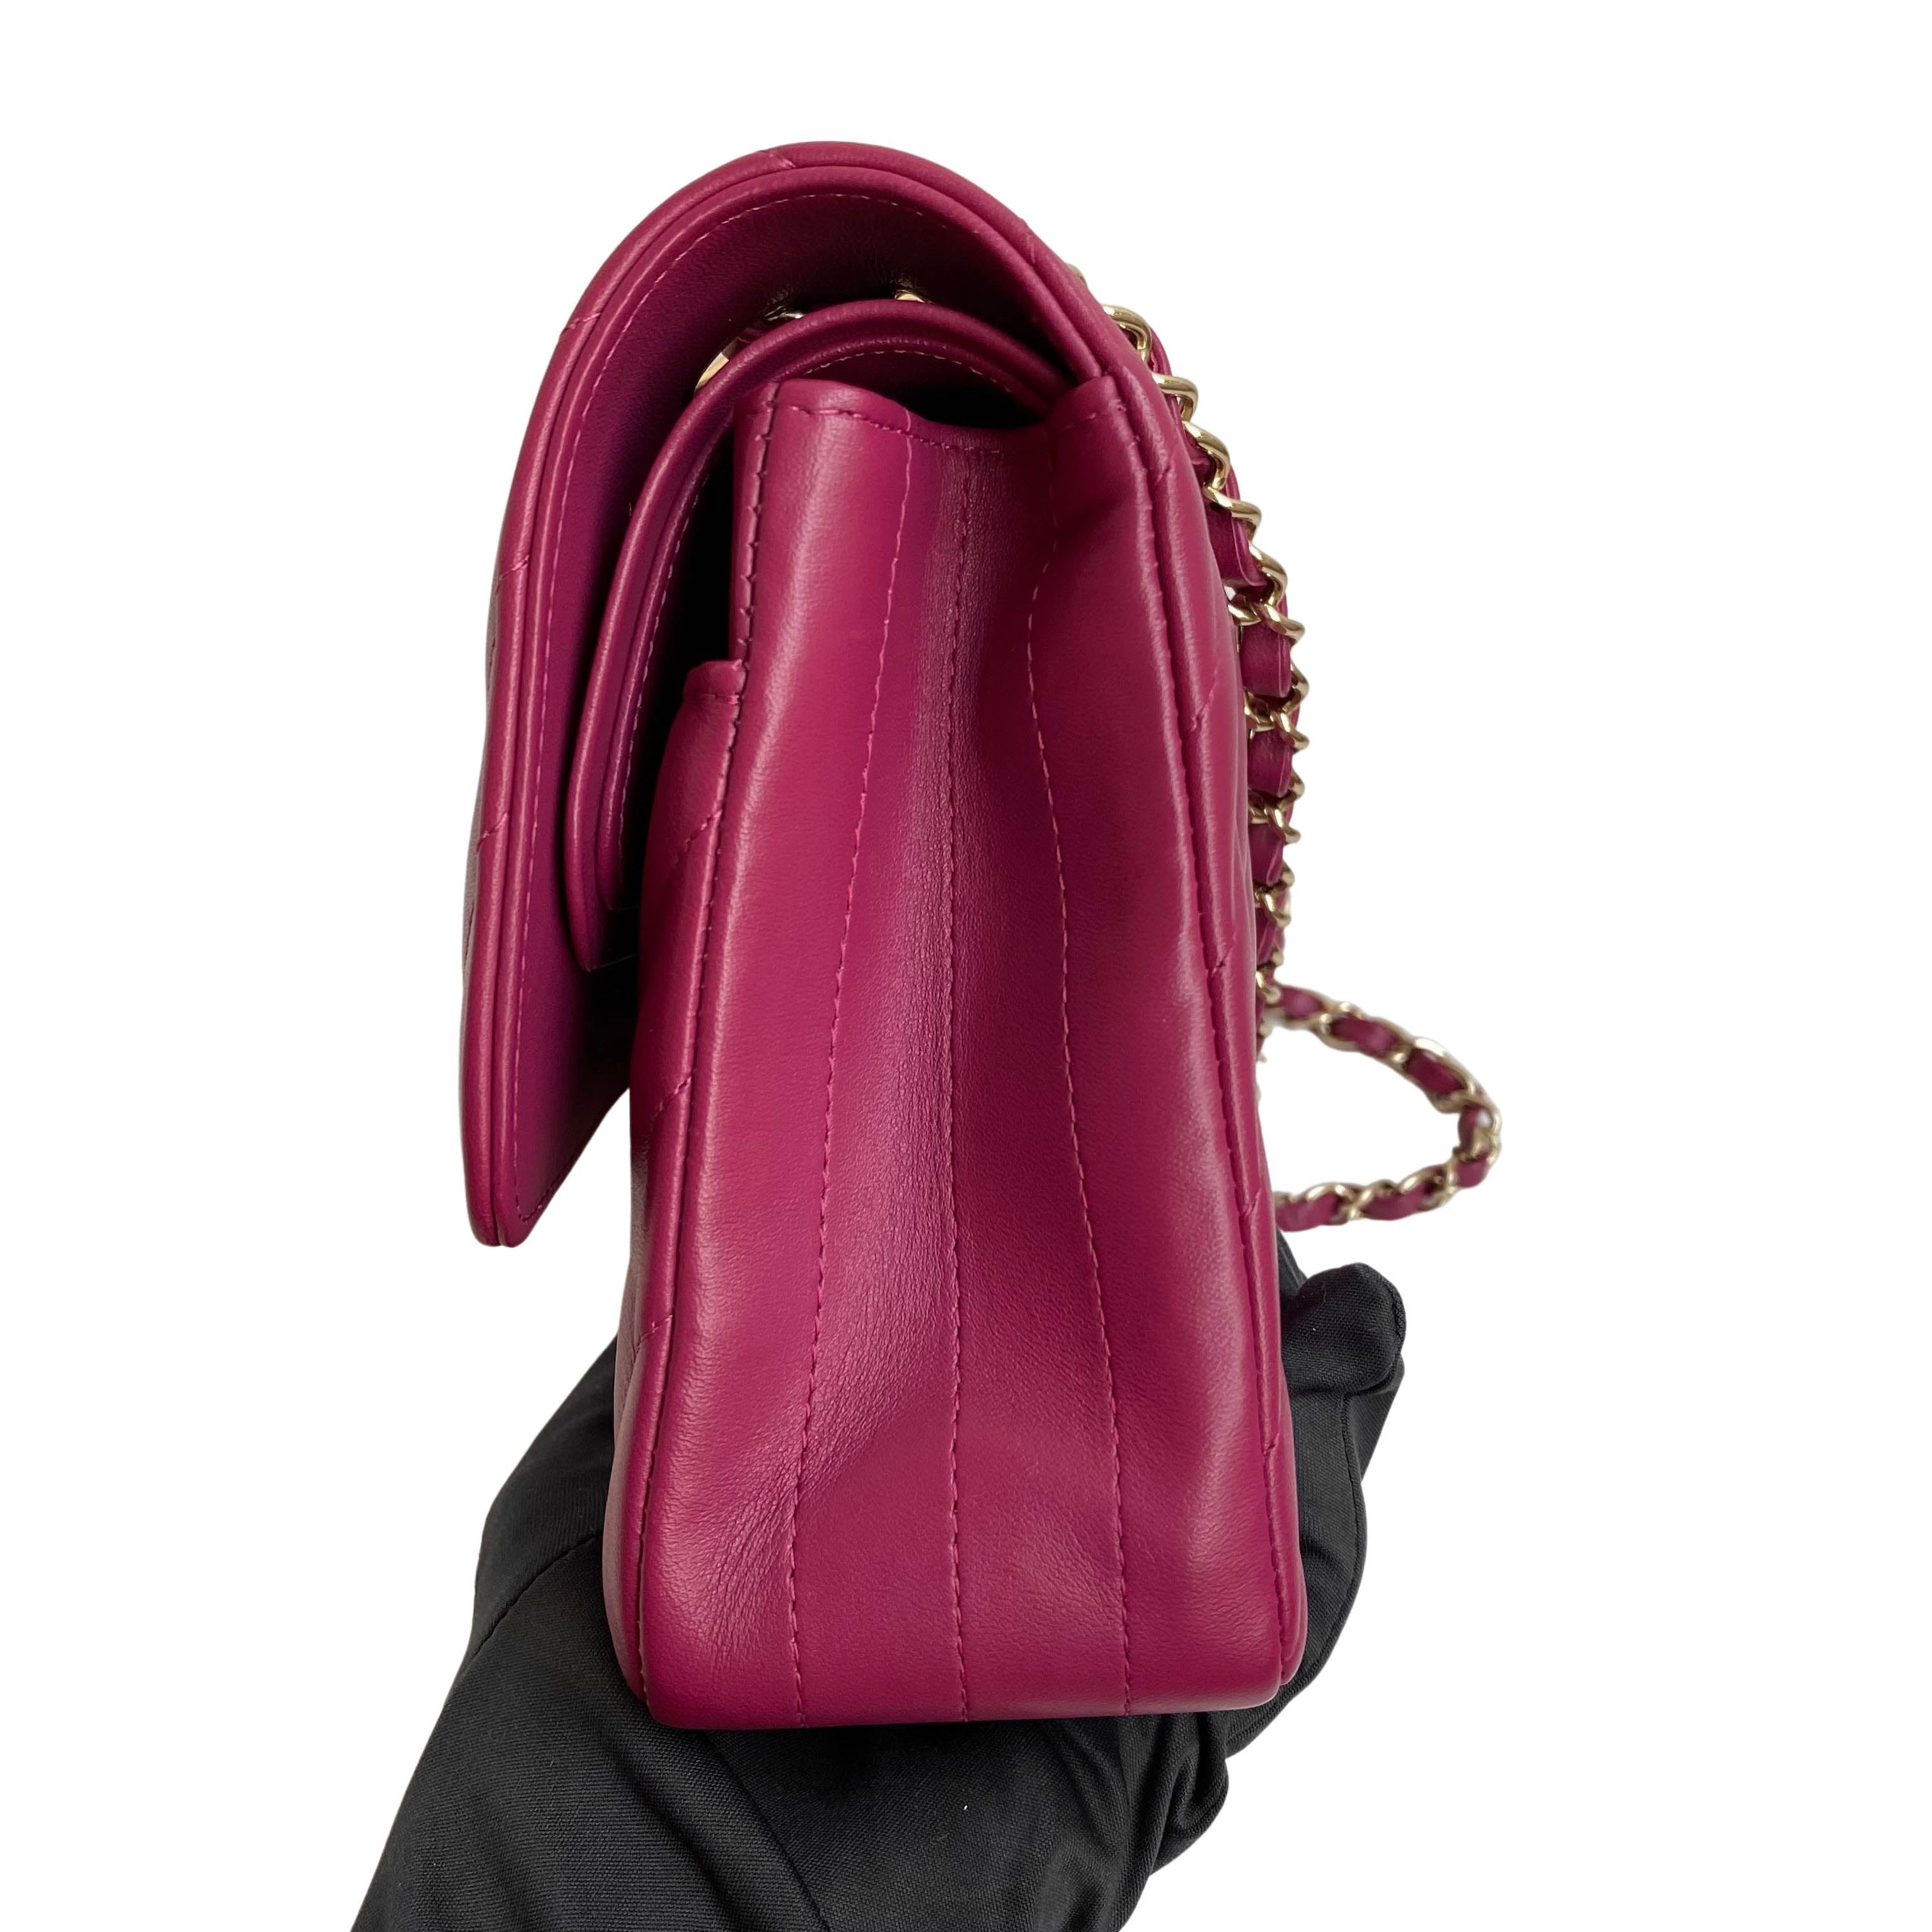 18B Raspberry Dark Pink Lambskin Medium Classic Double Flap Bag